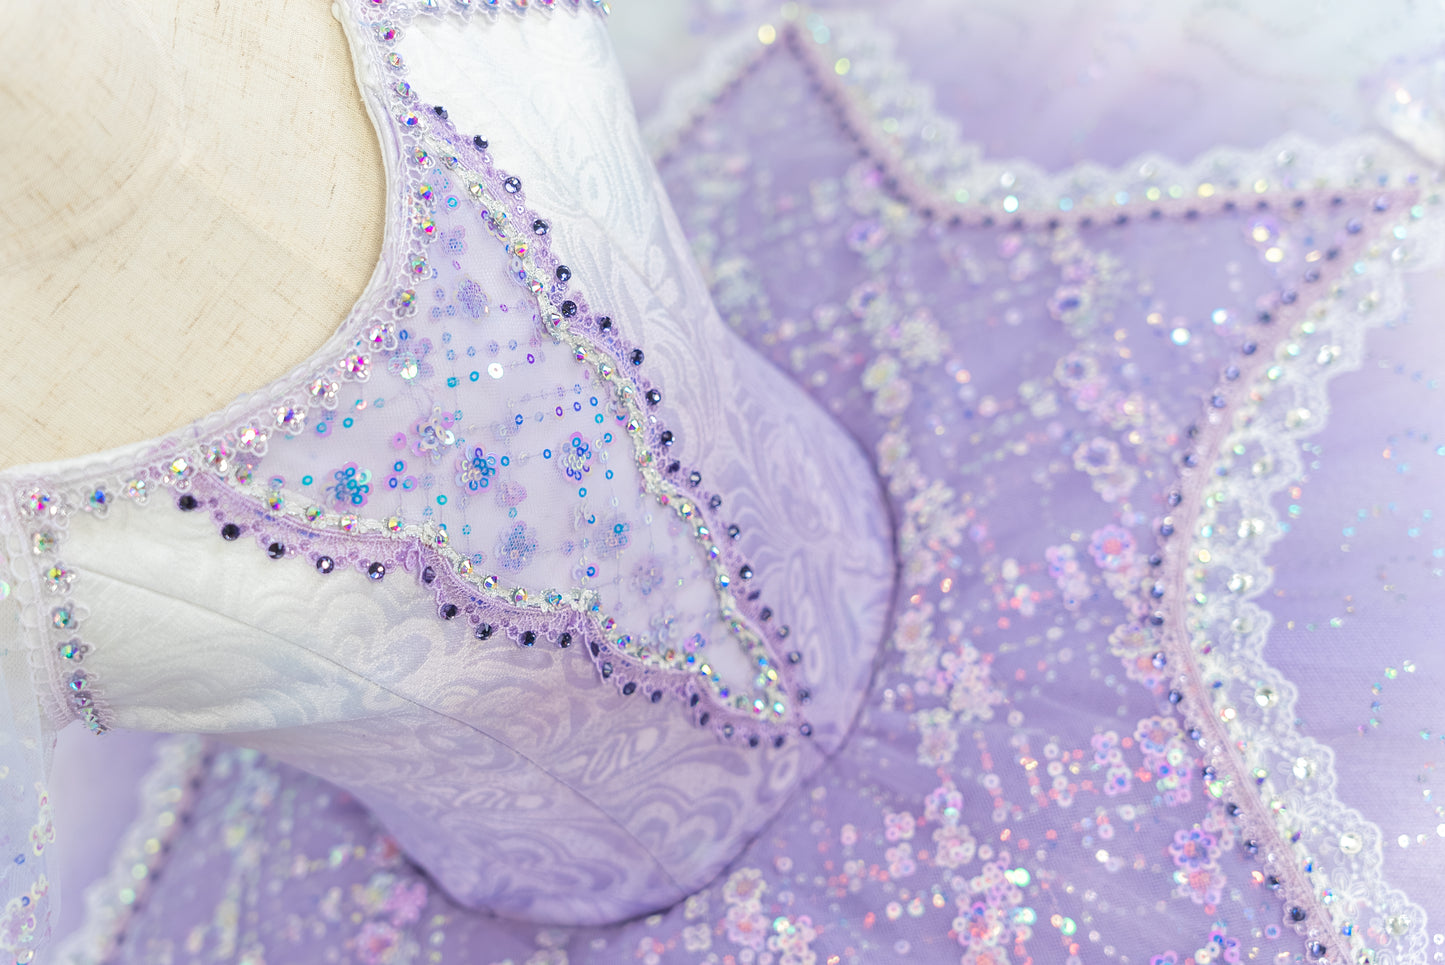 Violet Fairy - Professional Tutu - Dancewear by Patricia